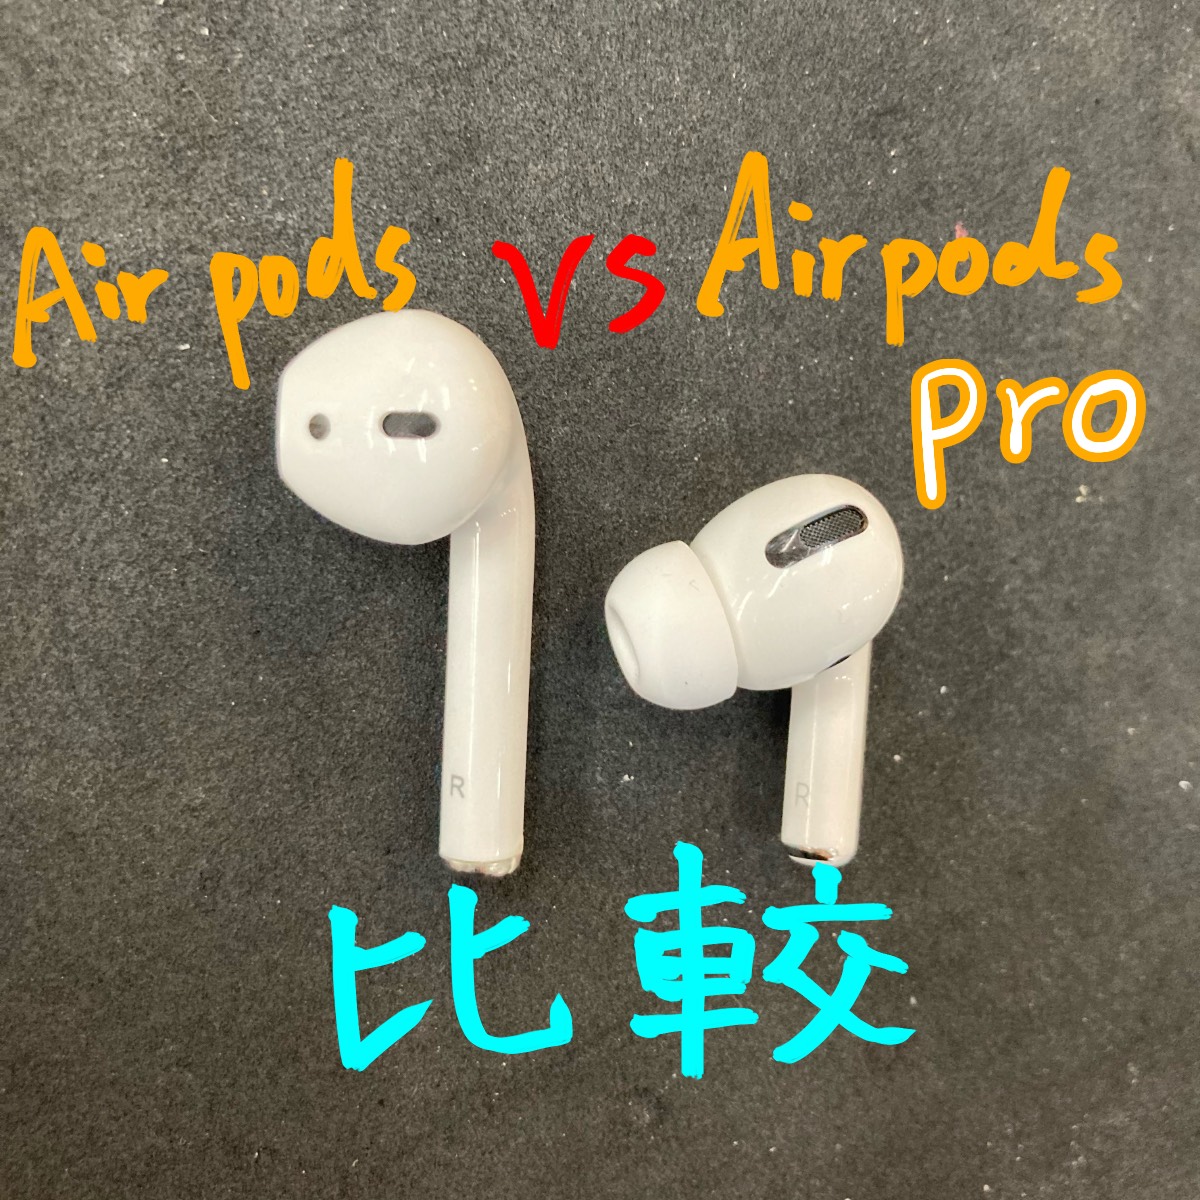 Air PodsとAir Pods Pro何が違う？？